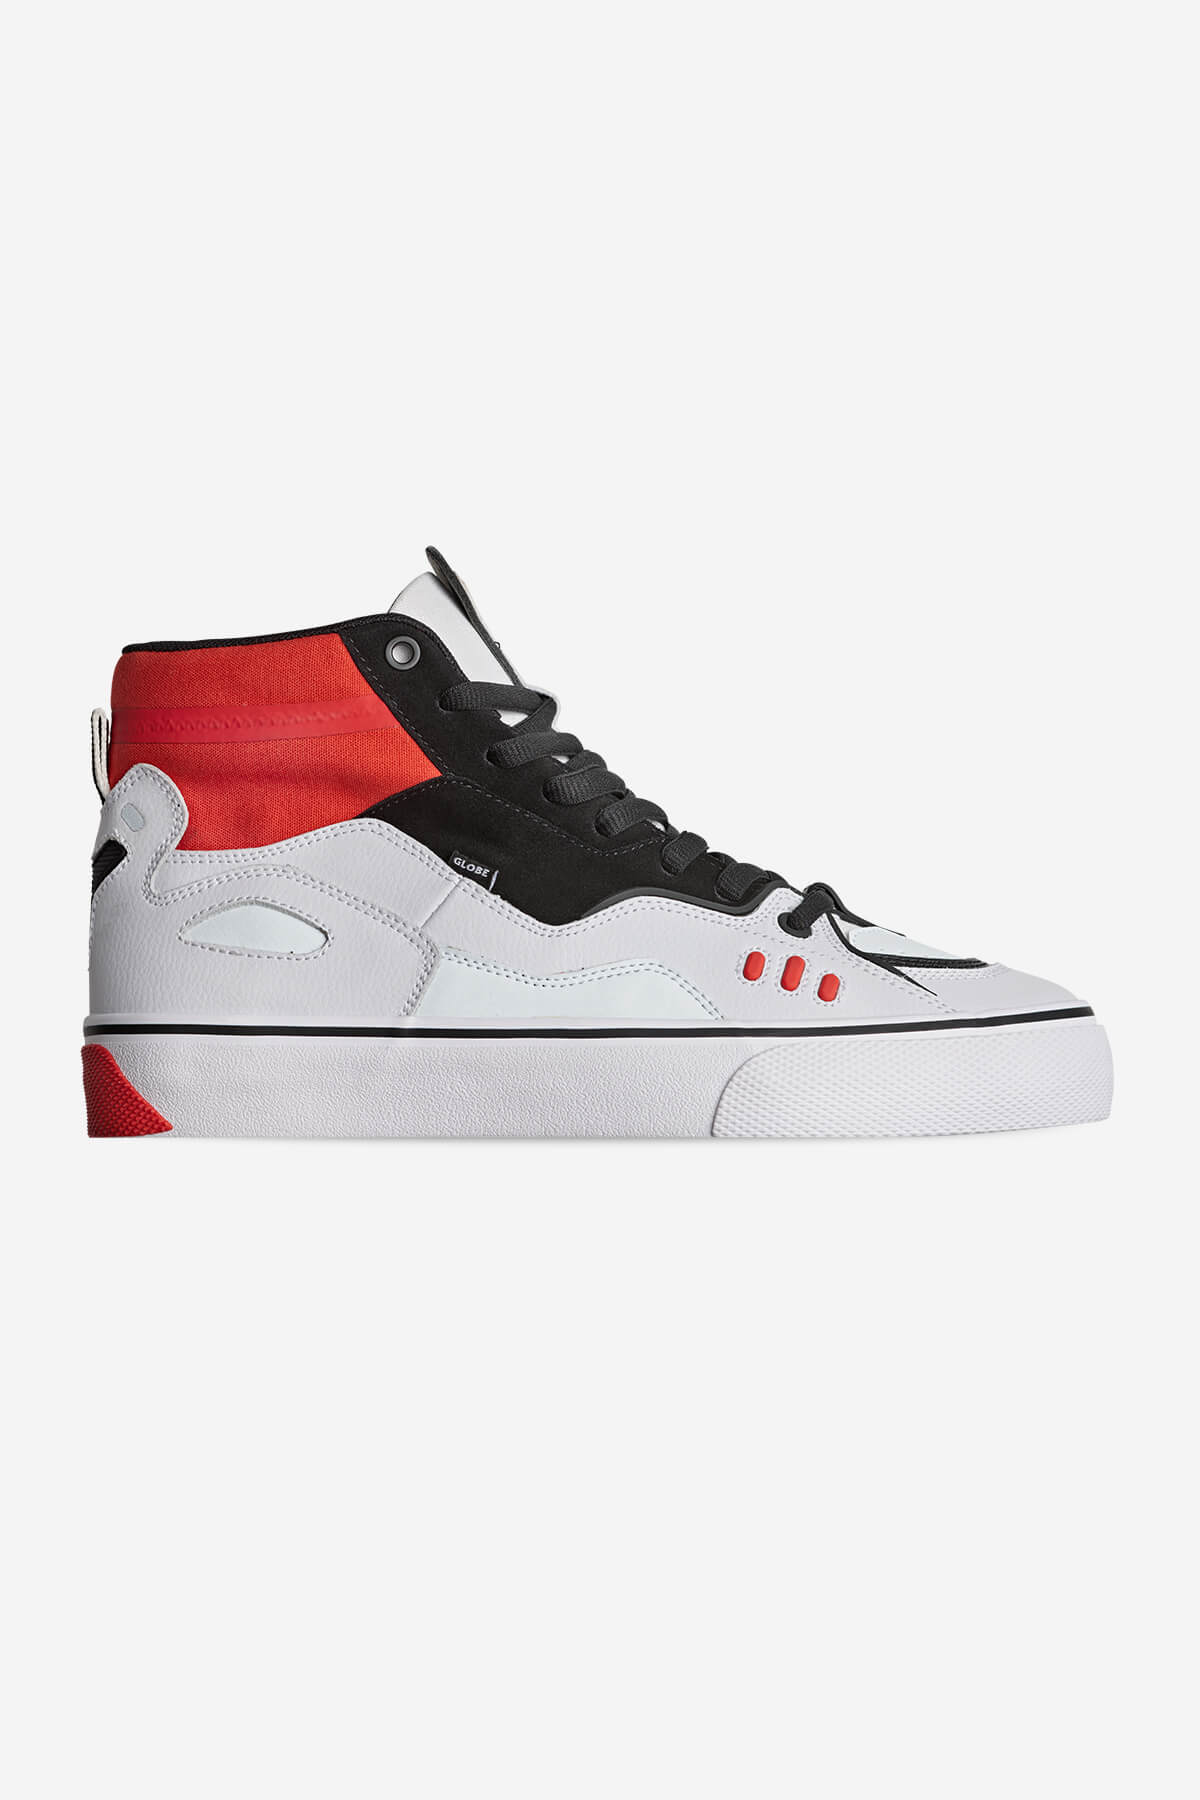 dimension white black red skate shoes